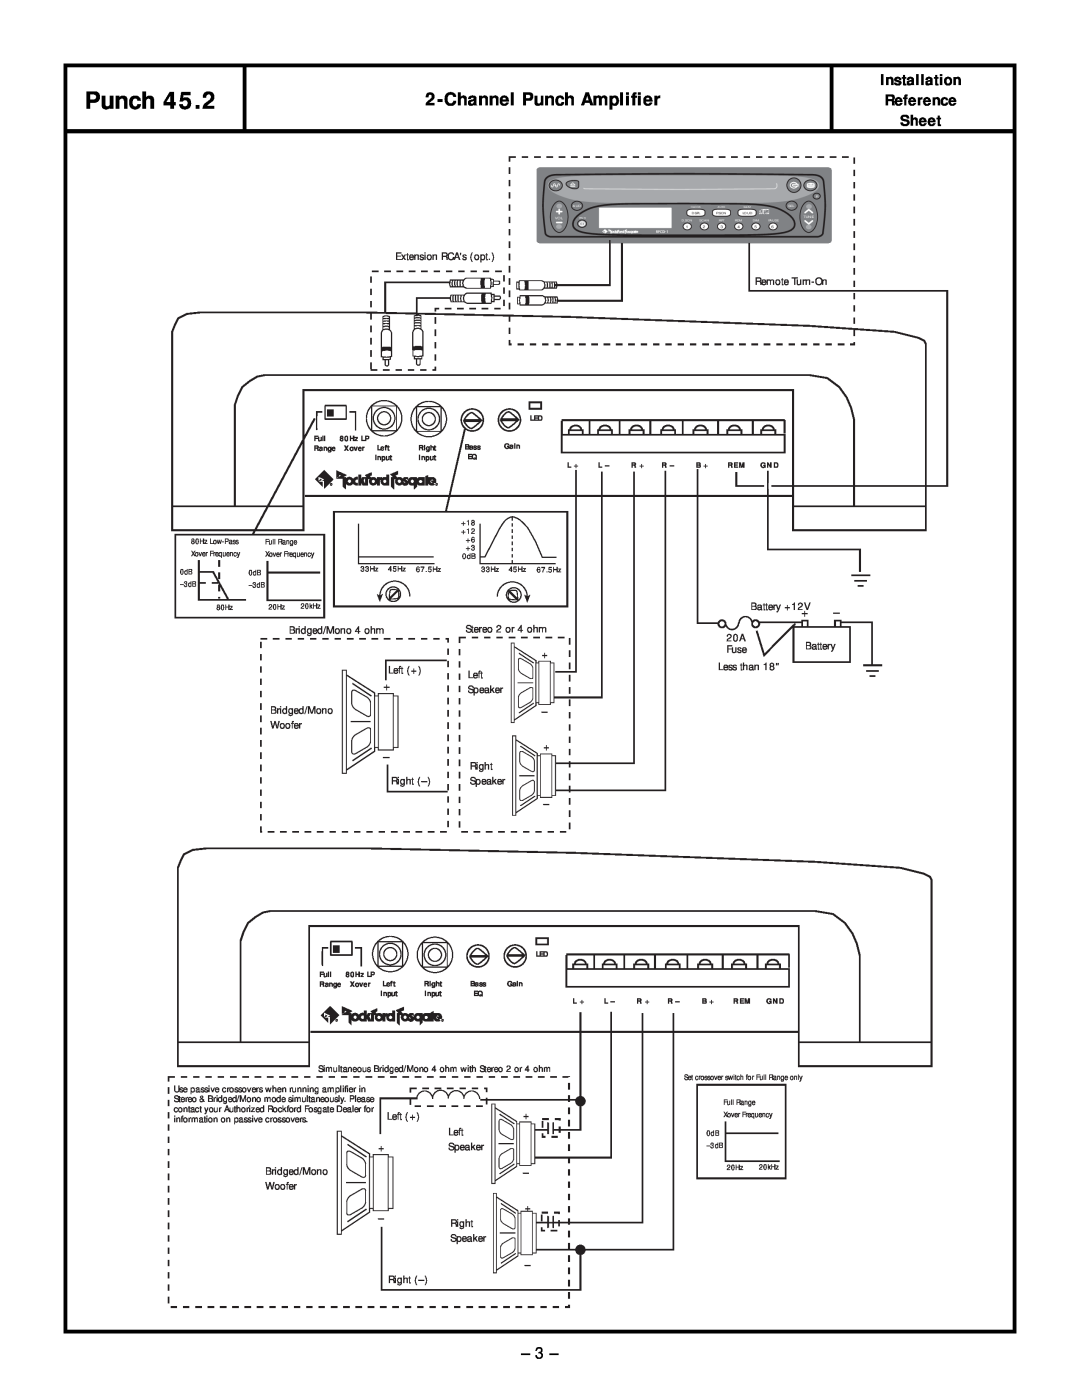 Rockford Fosgate 45.2 manual ChannelPunch Amplifier, Installation Reference Sheet 